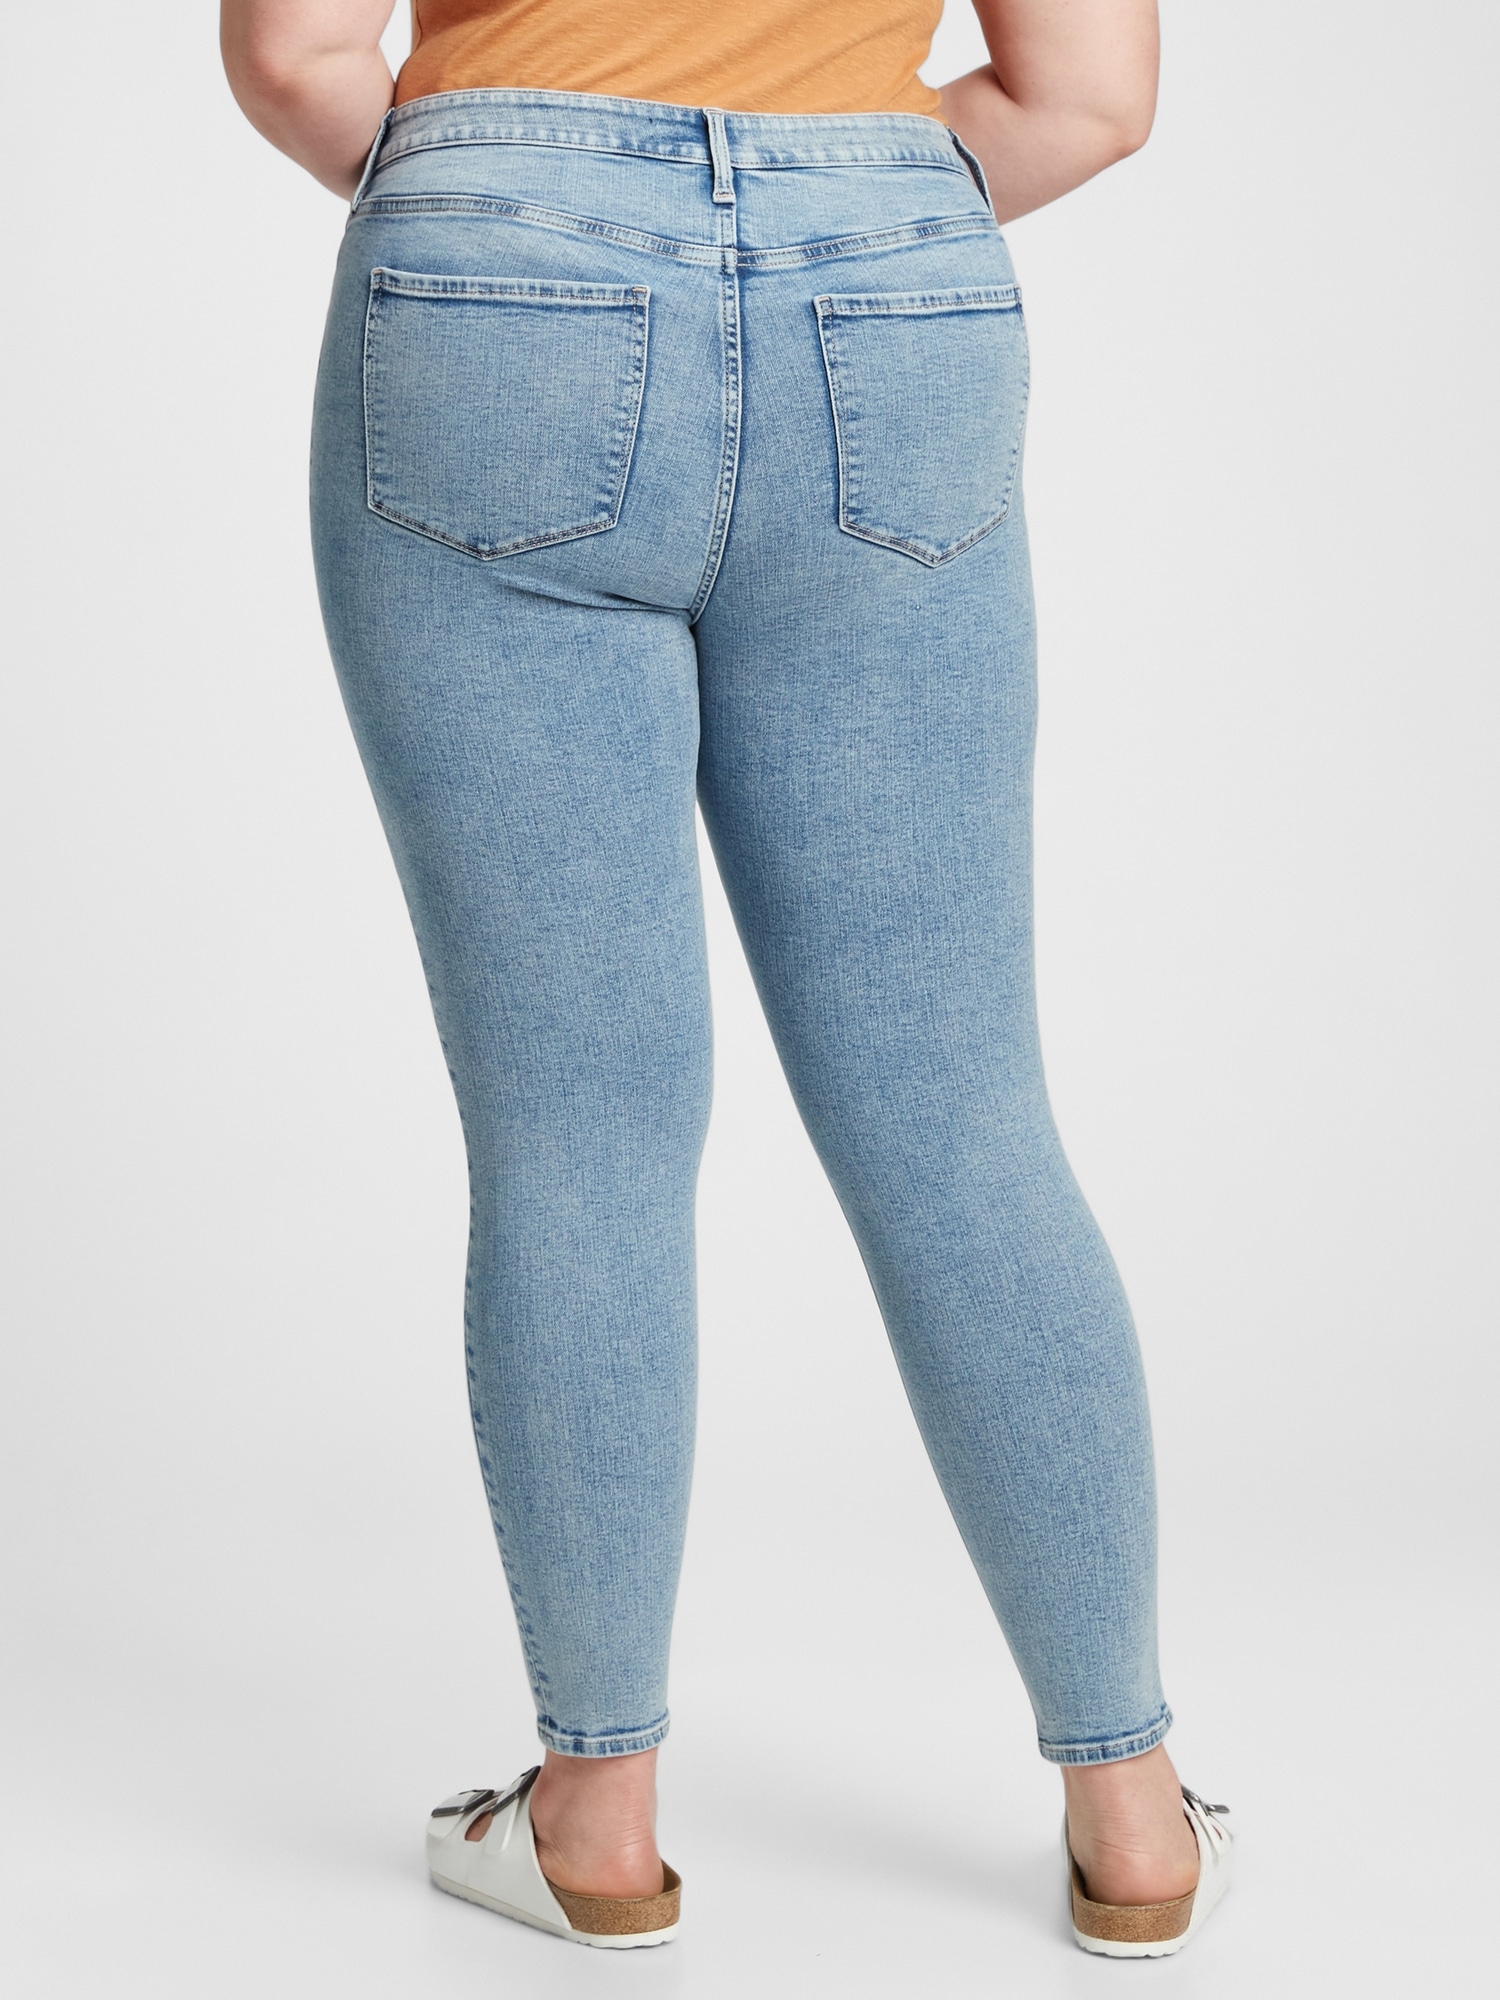 veiligheid strottenhoofd dubbel High Rise Universal Legging Jeans with Washwell | Gap Factory